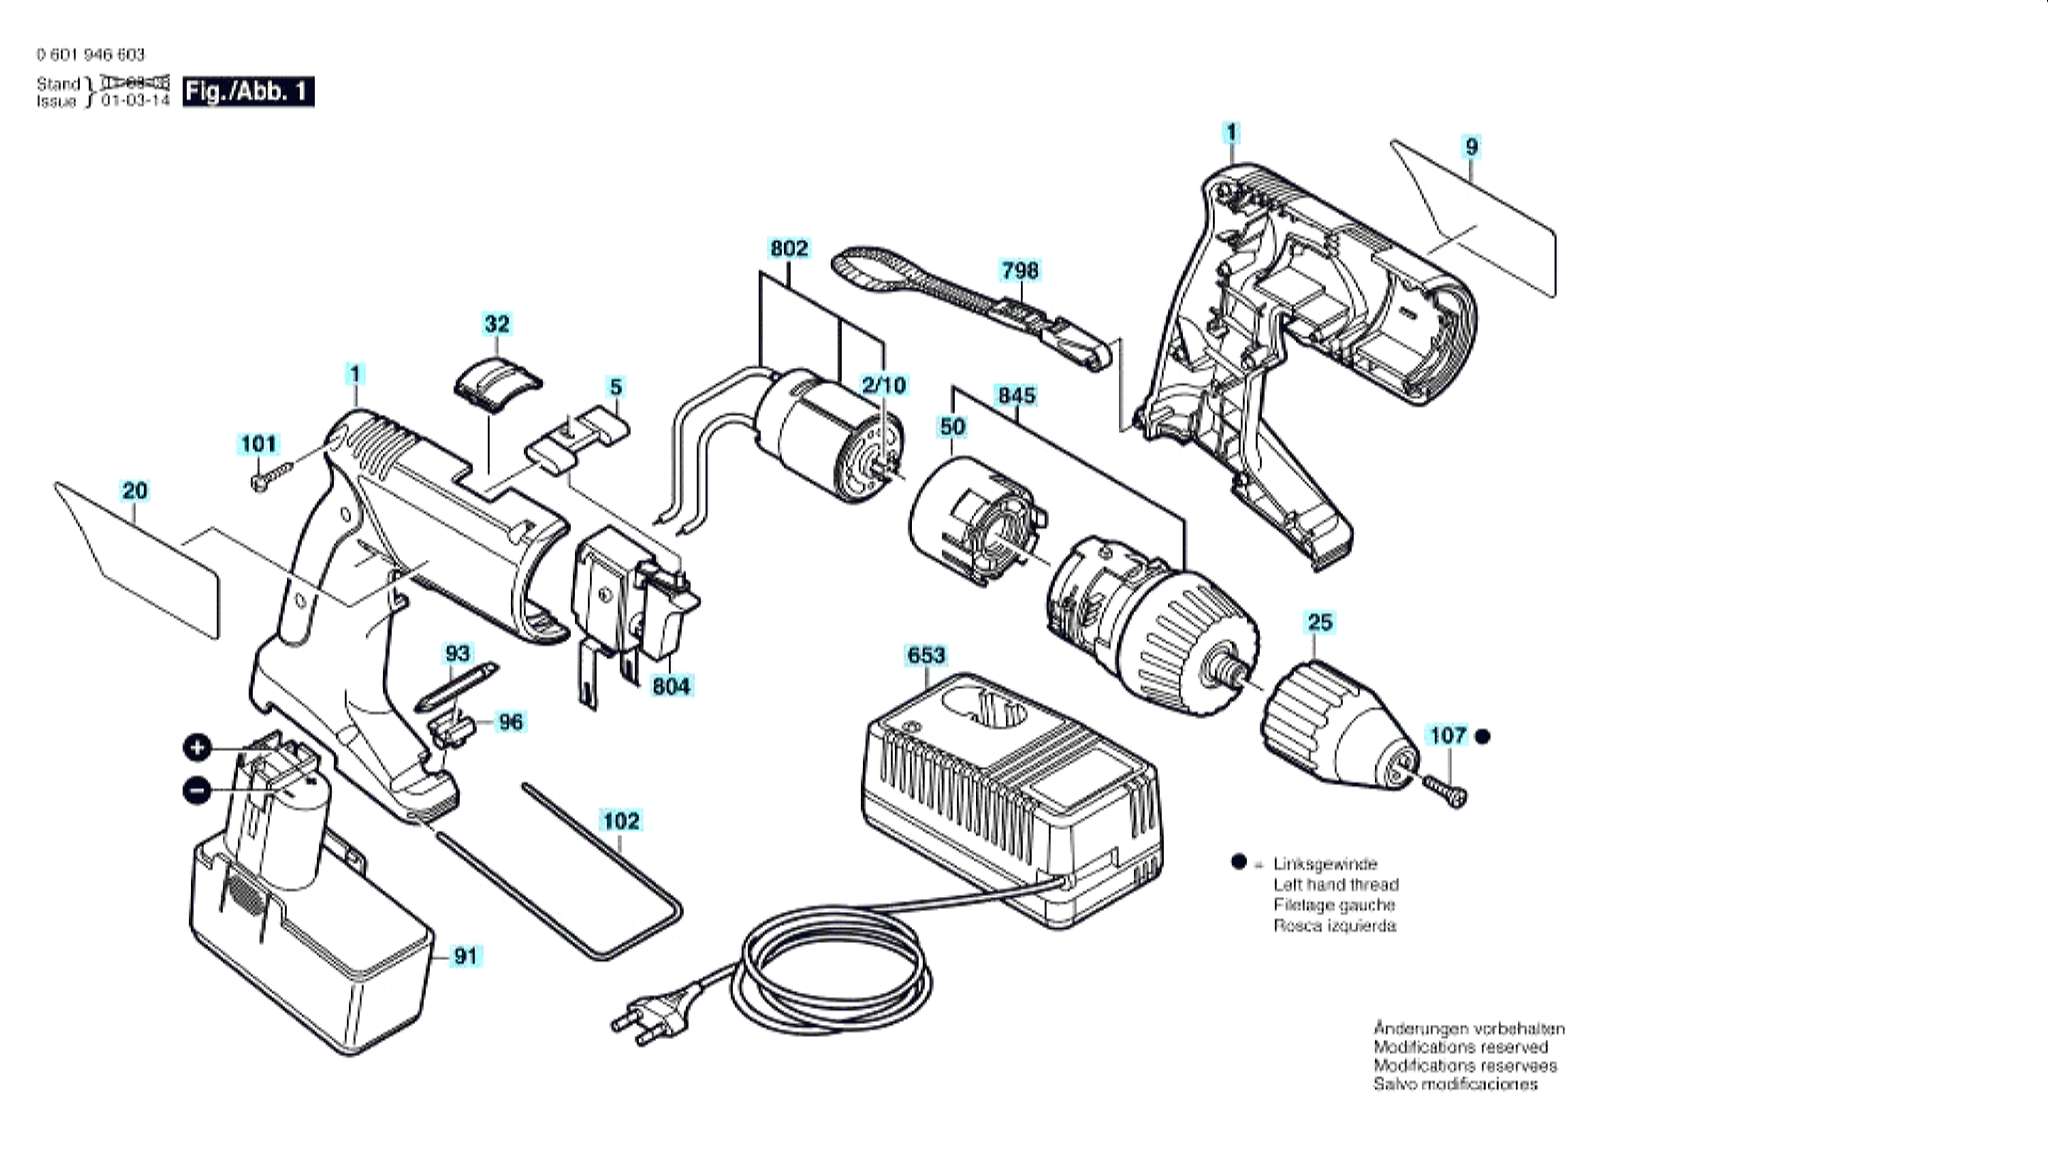 Запчасти, схема и деталировка Bosch GSR 12 VPE-2 (ТИП 0601946555)